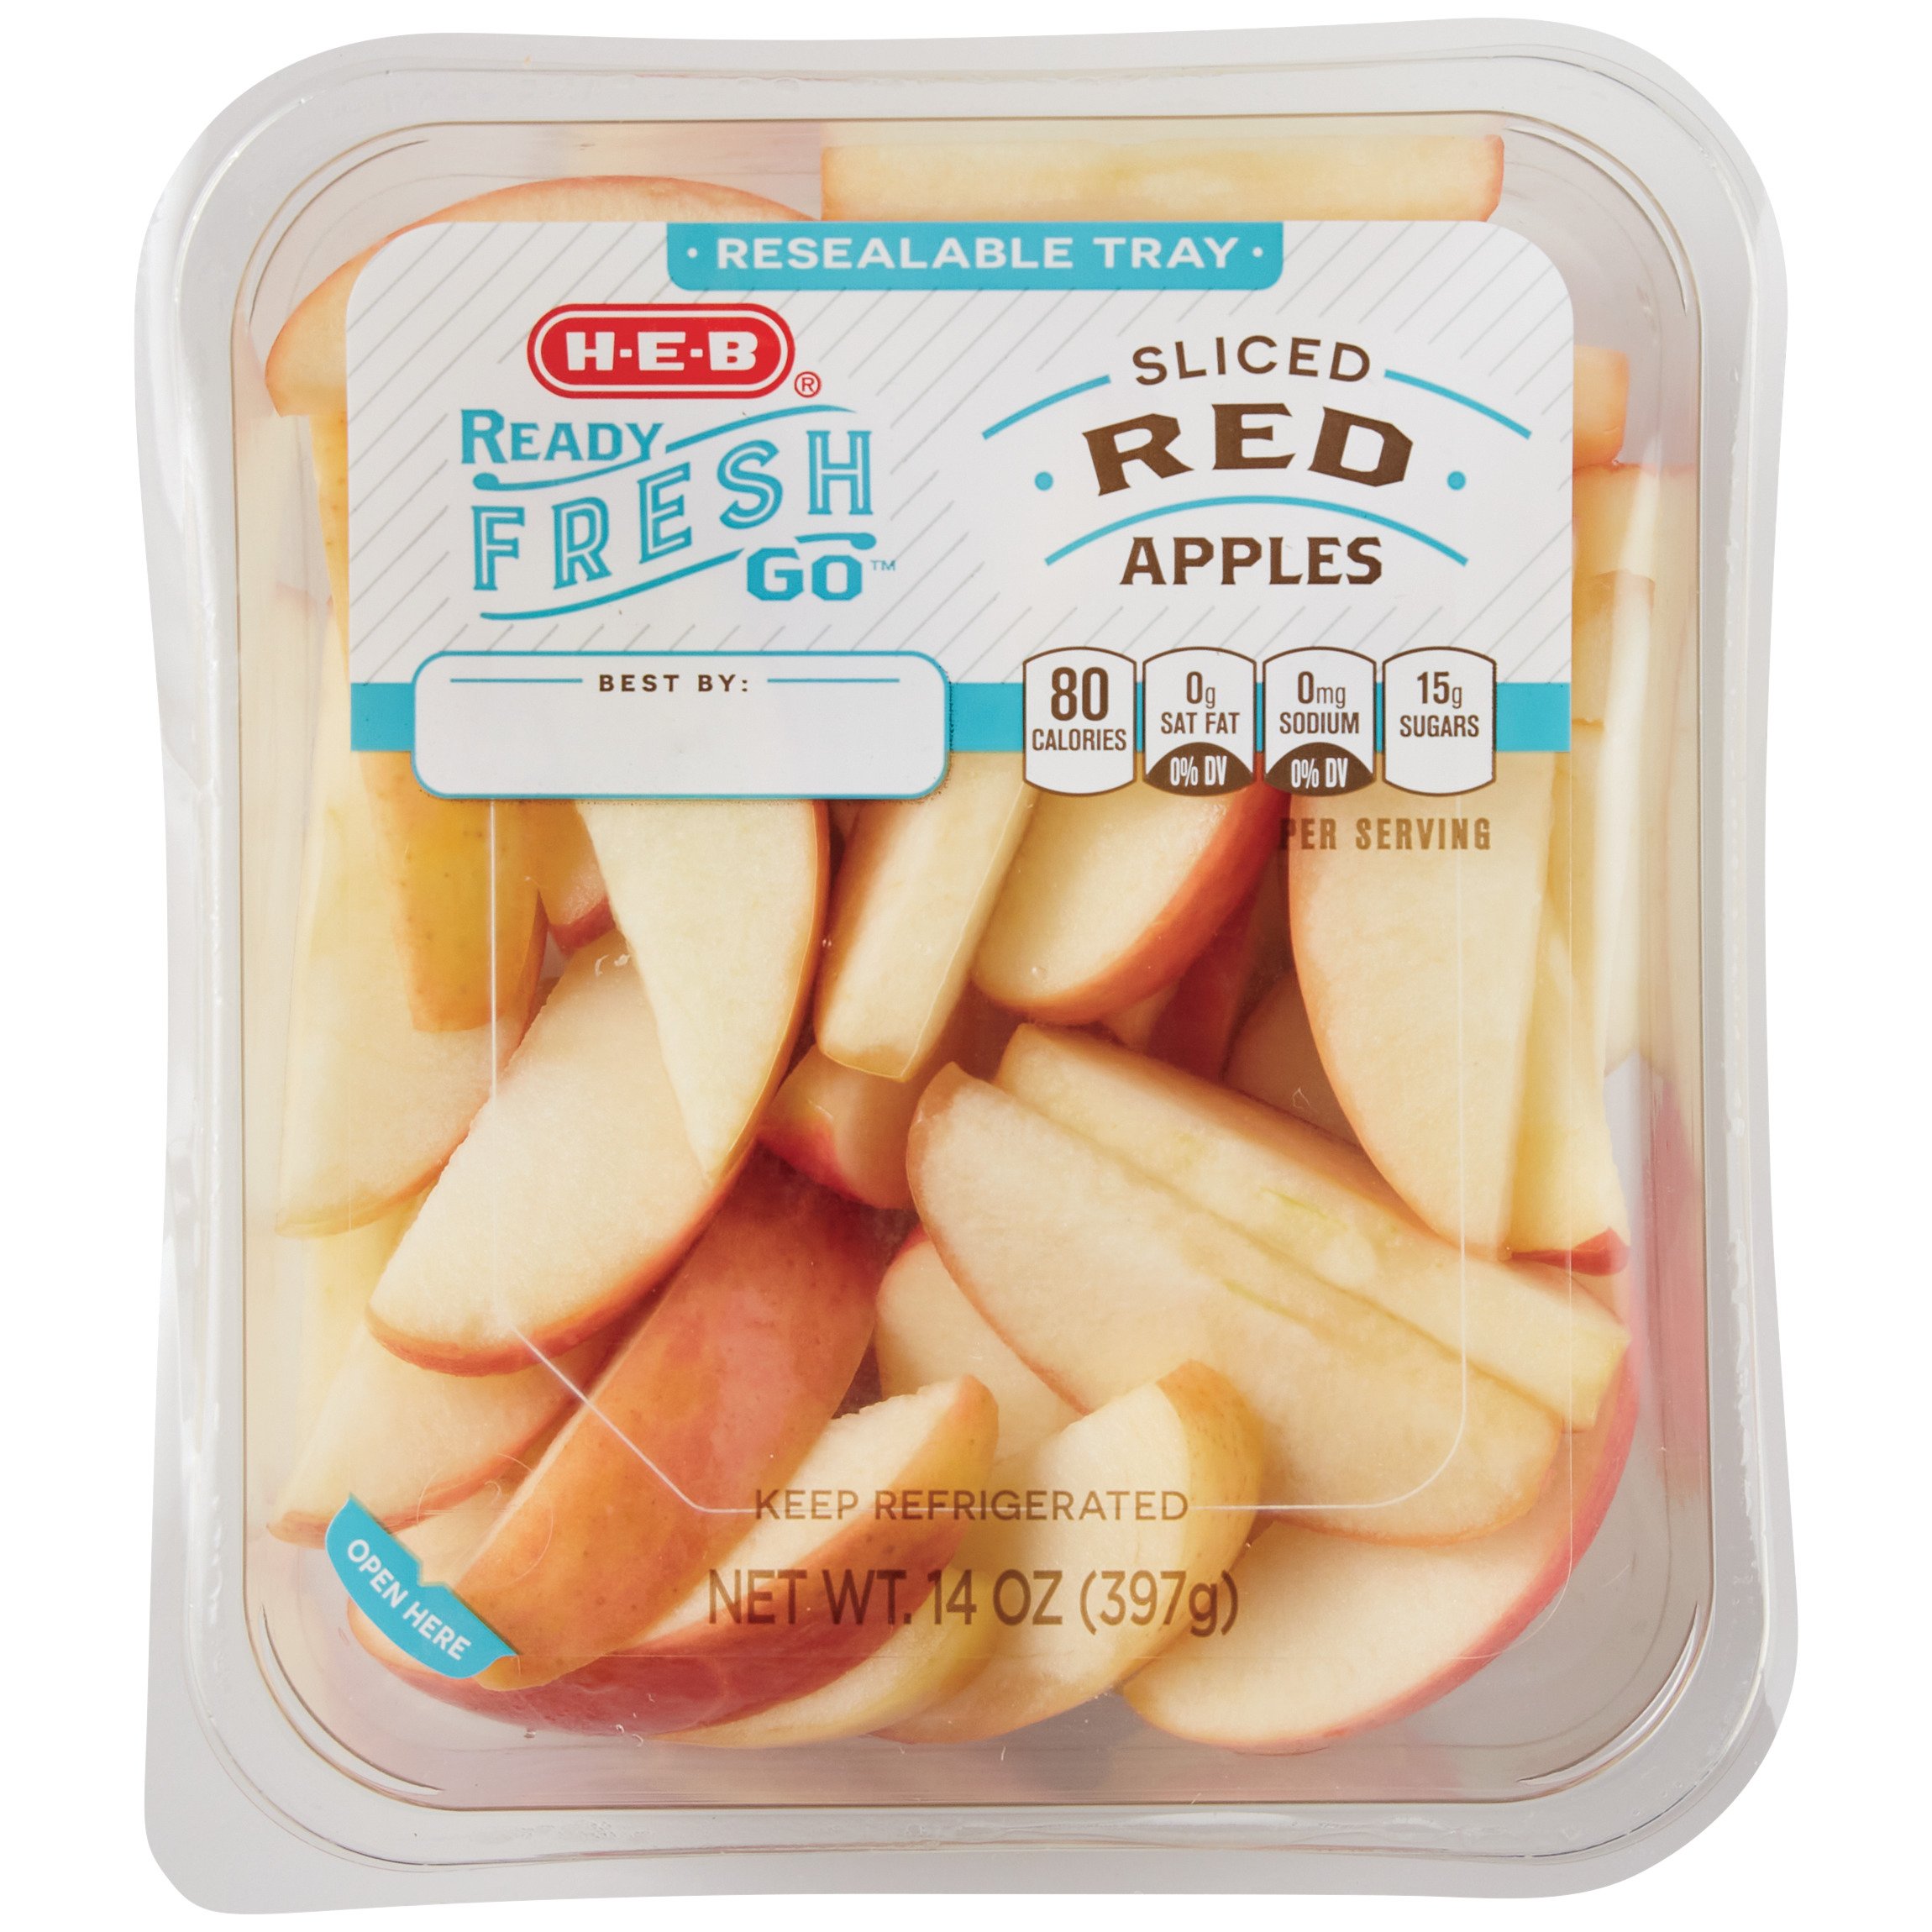 H-E-B Ready, Fresh, Go! Sliced Red Apples